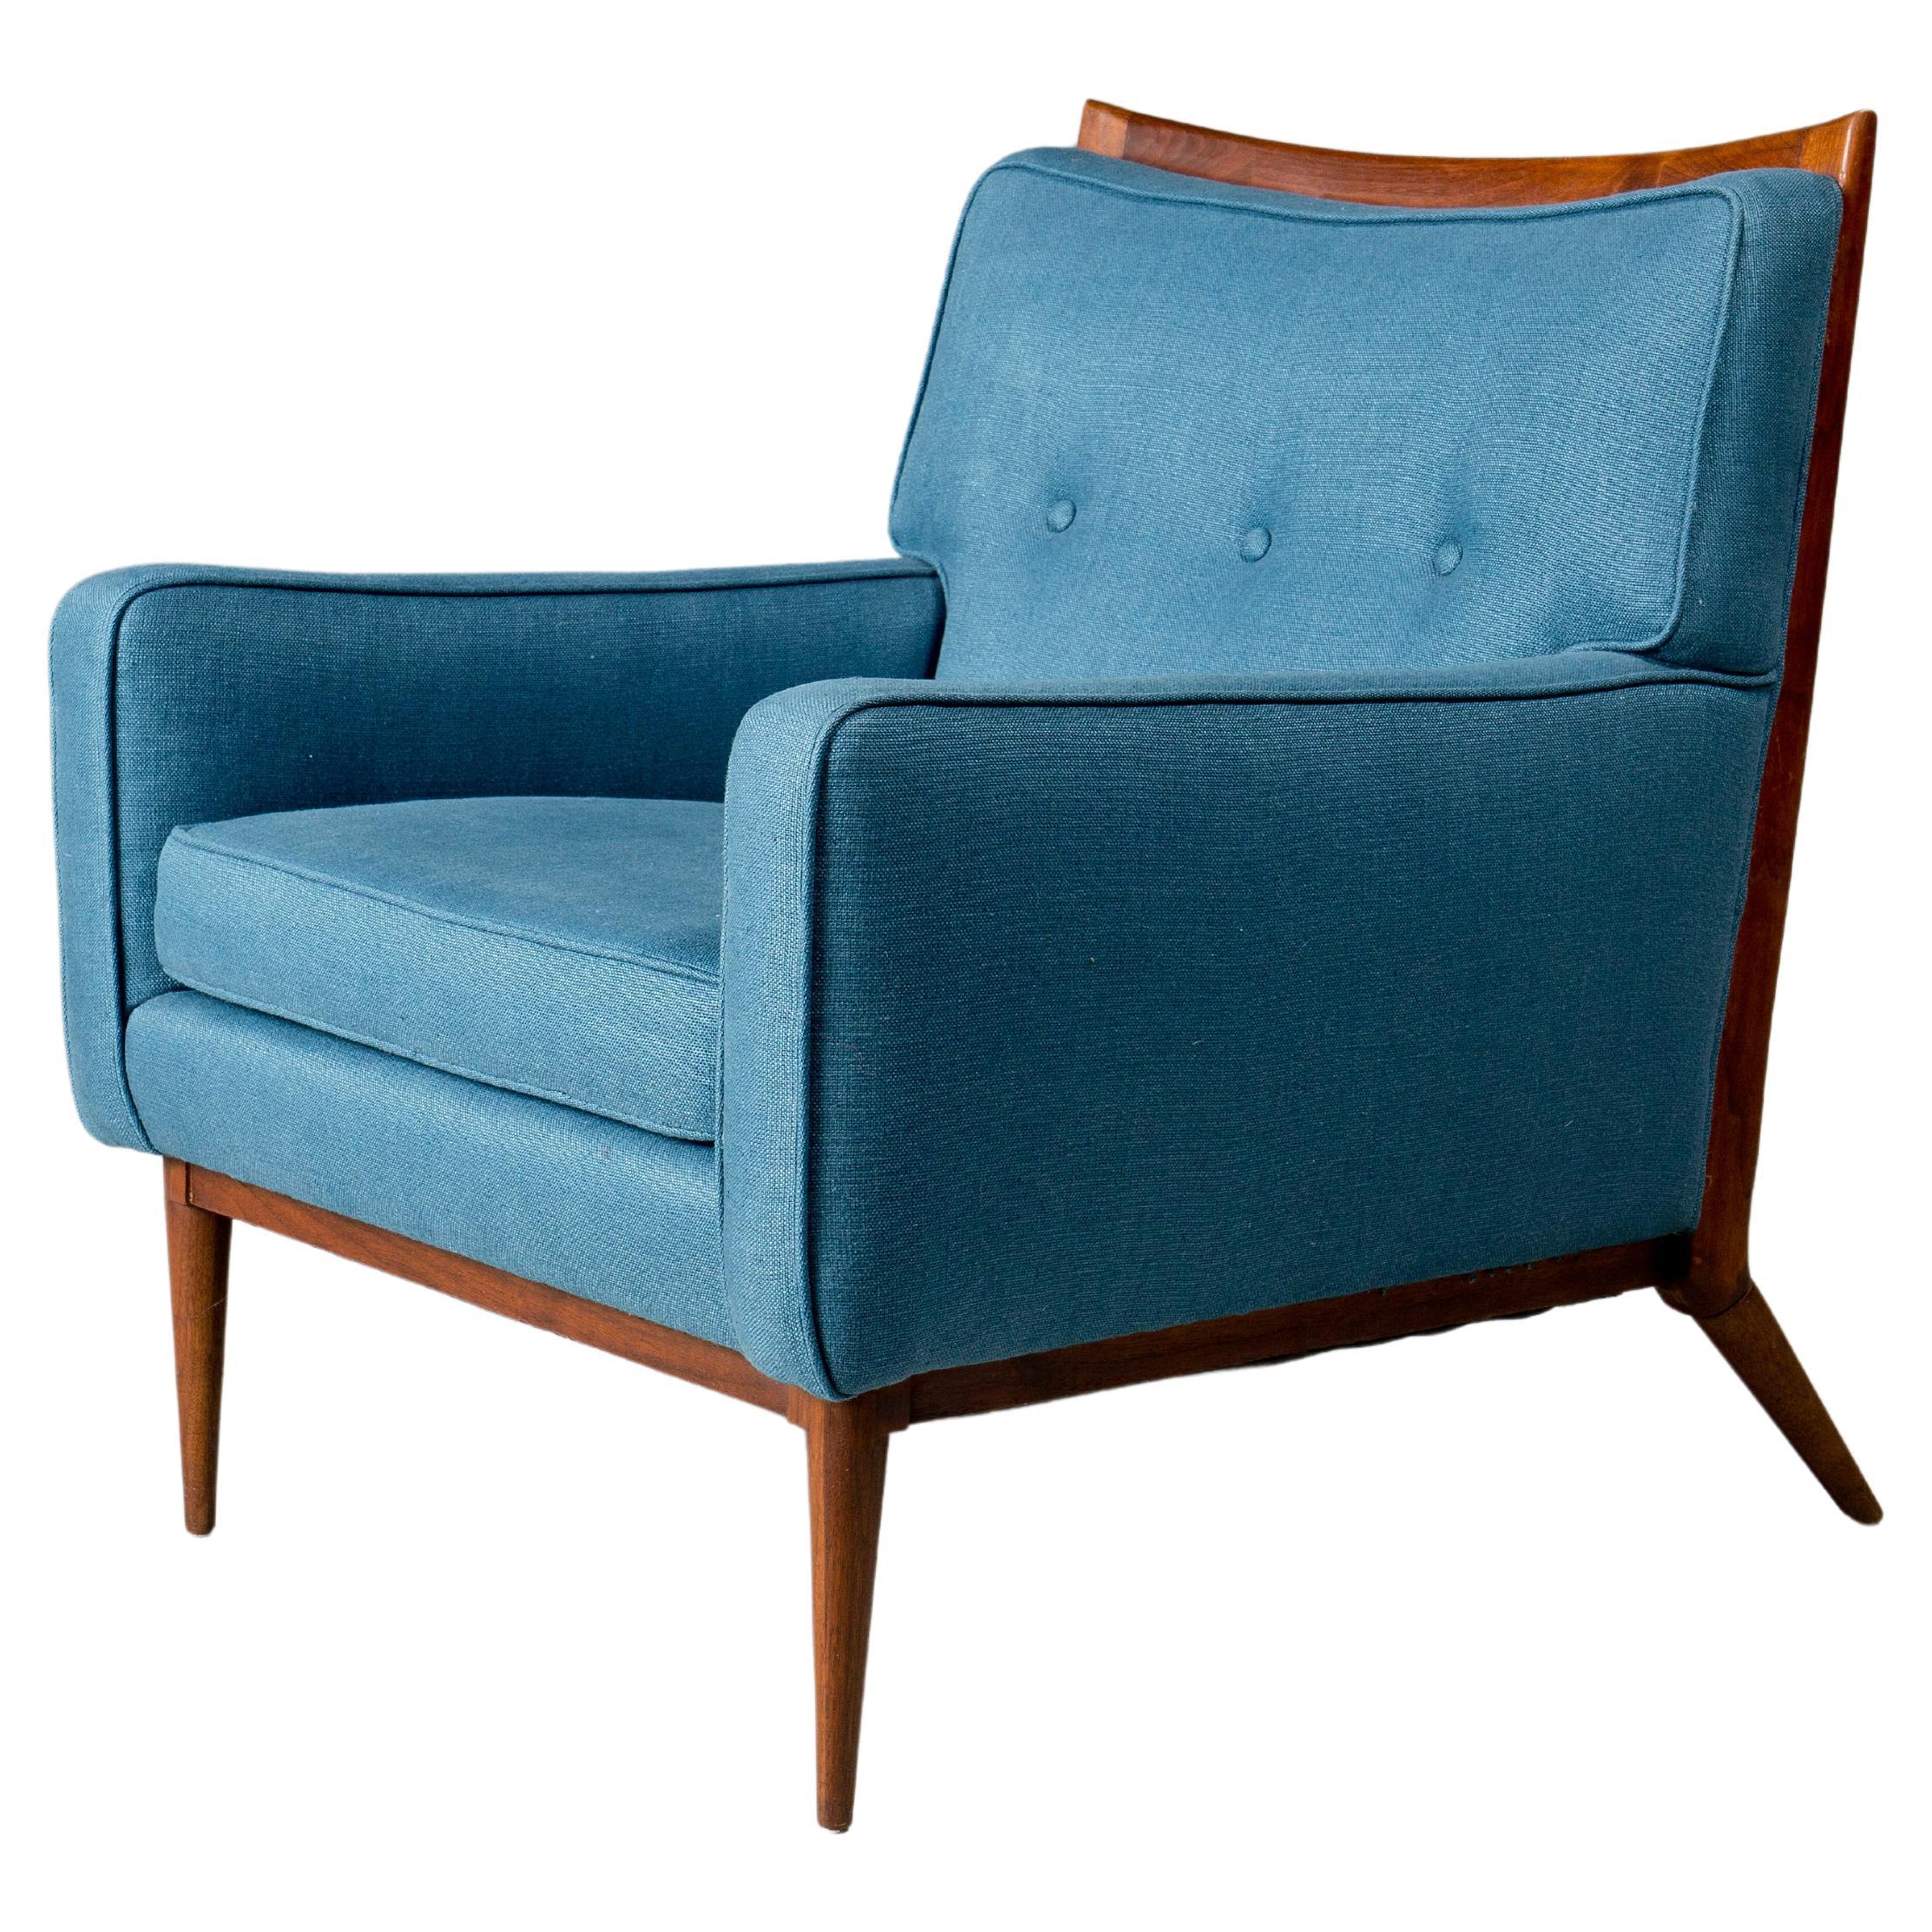 Paul McCobb Lounge Chair, 1950's For Sale